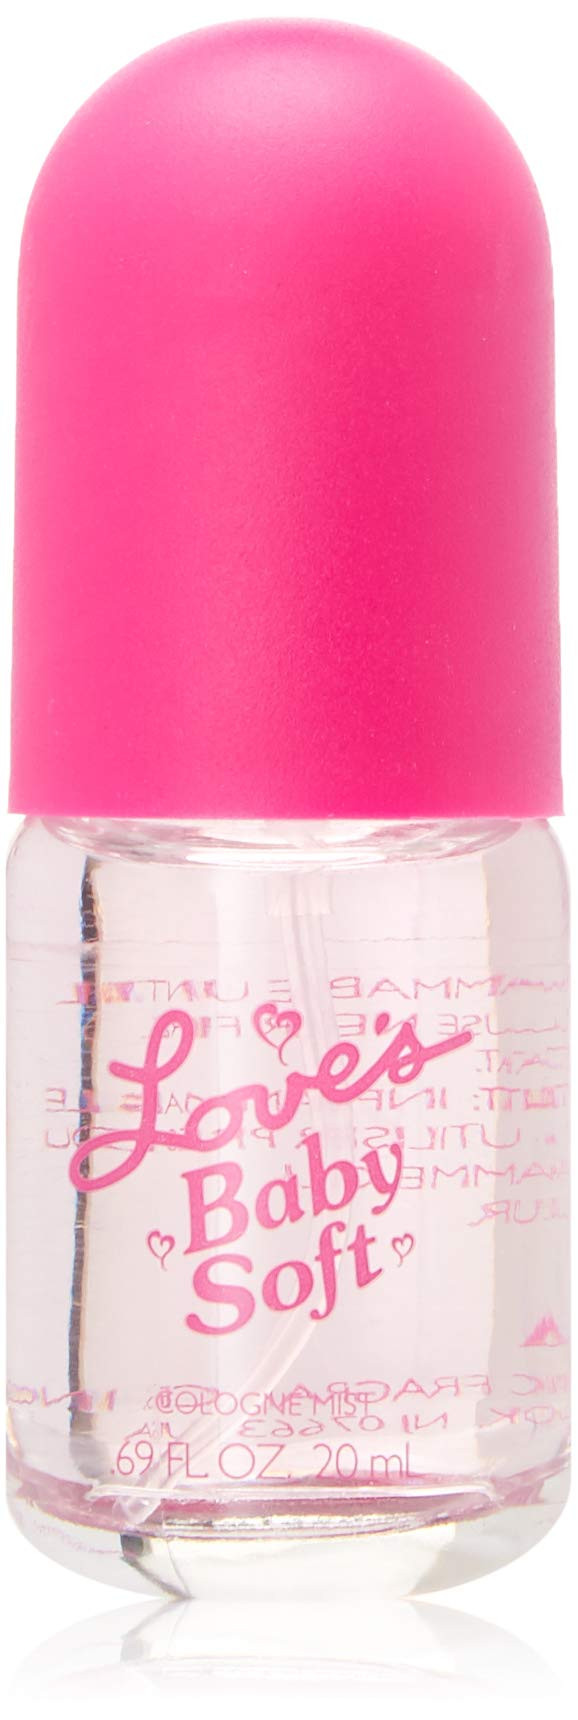 Loves Baby Soft Perfume Gift Set
 Amazon Dana Loves Baby Soft Cologne Spray 1 Ounce